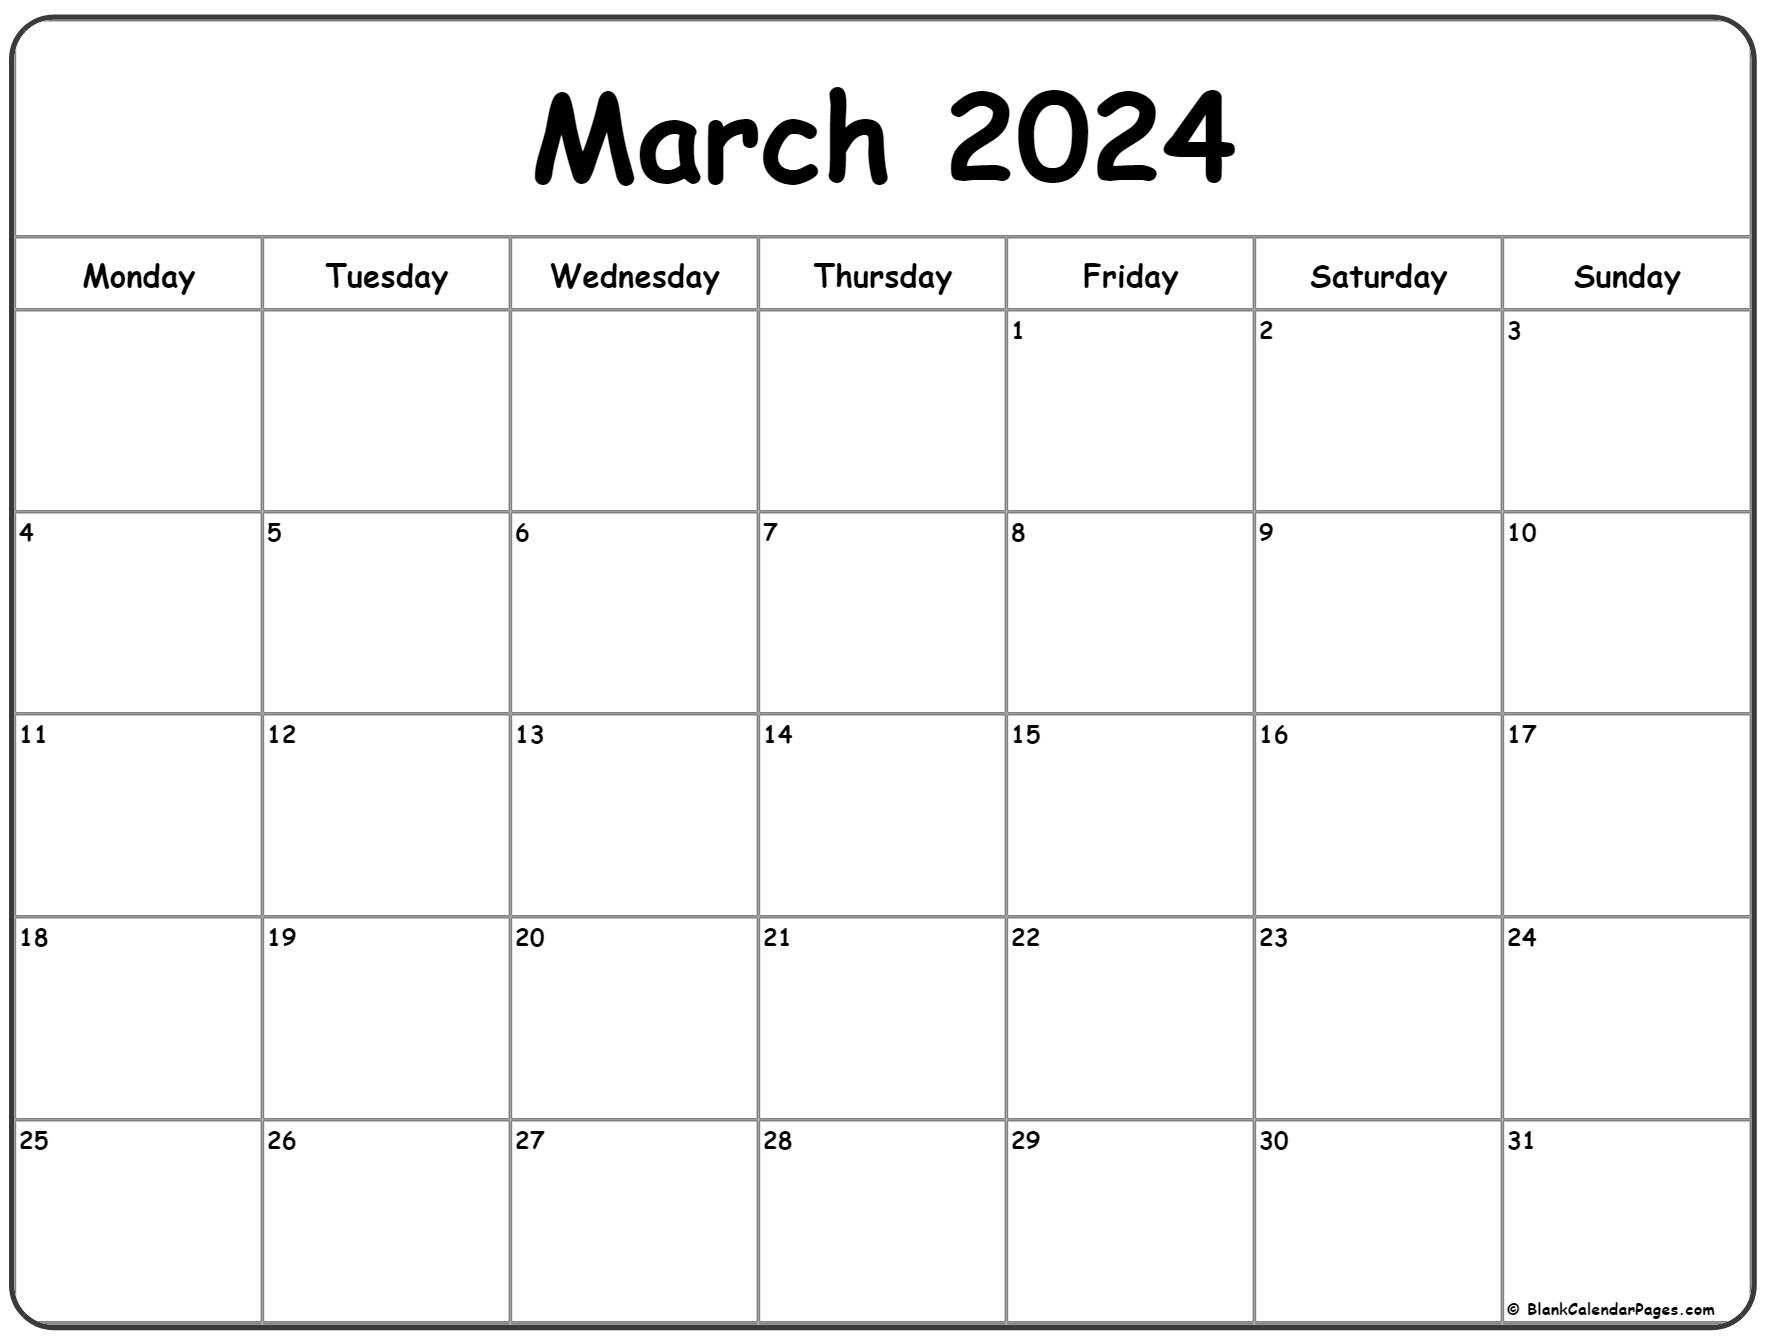 March 2024 Monday calendar. Monday to Sunday